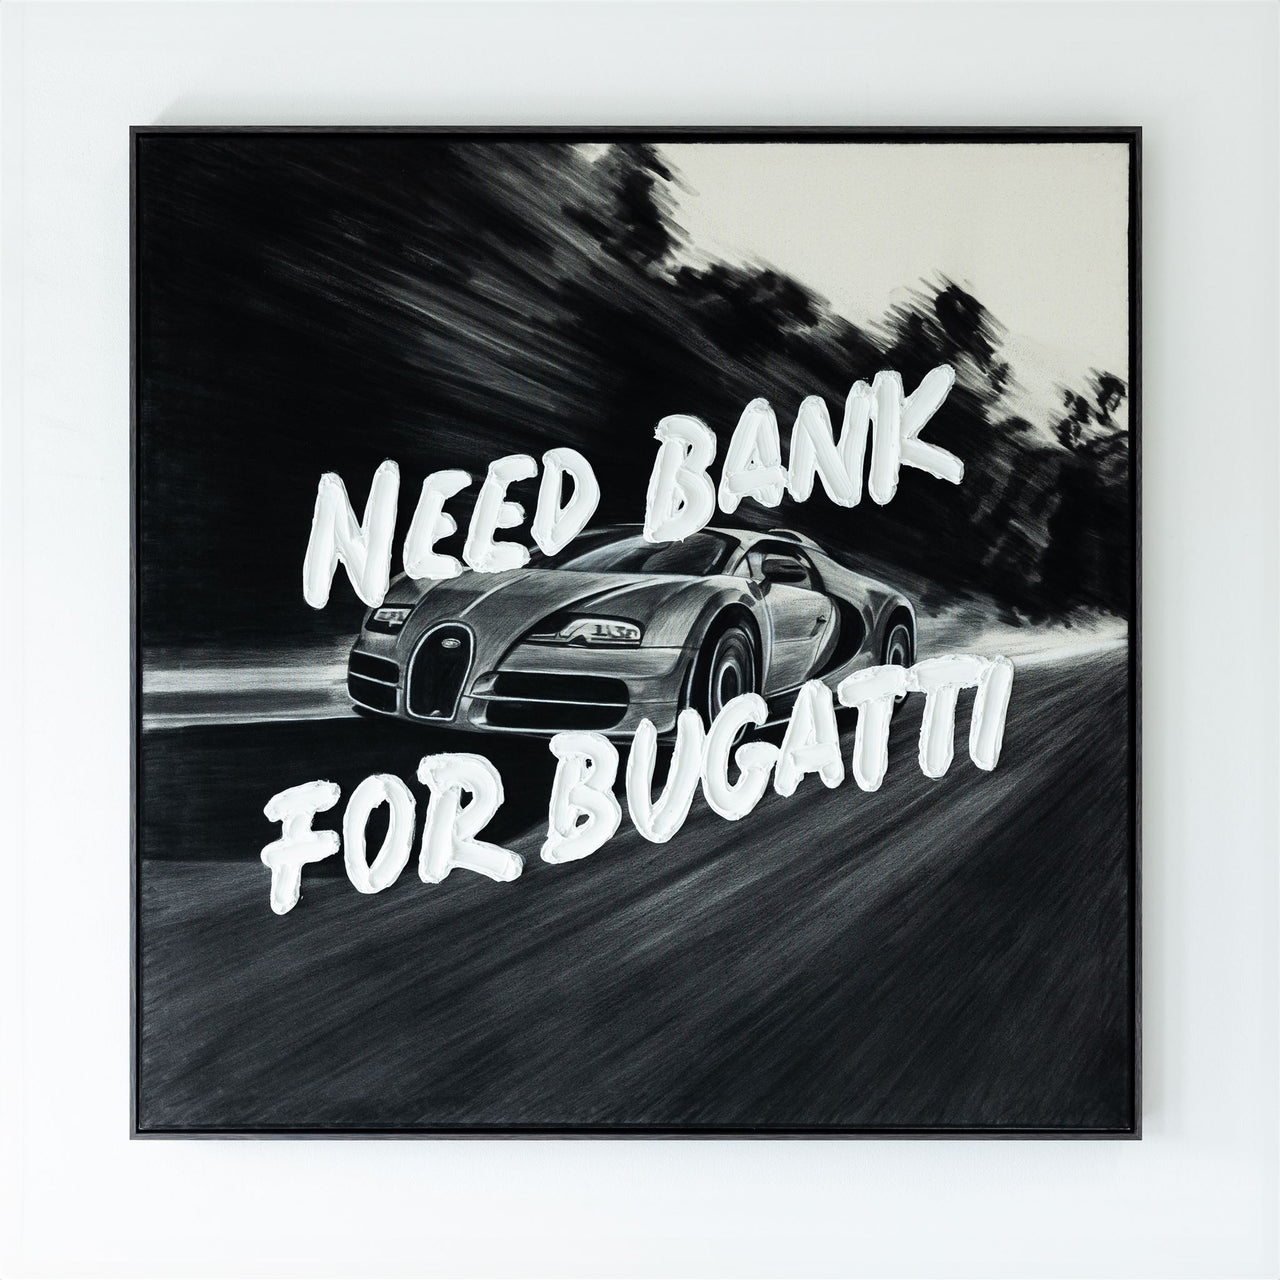 NEED BANK FOR BUGATTI